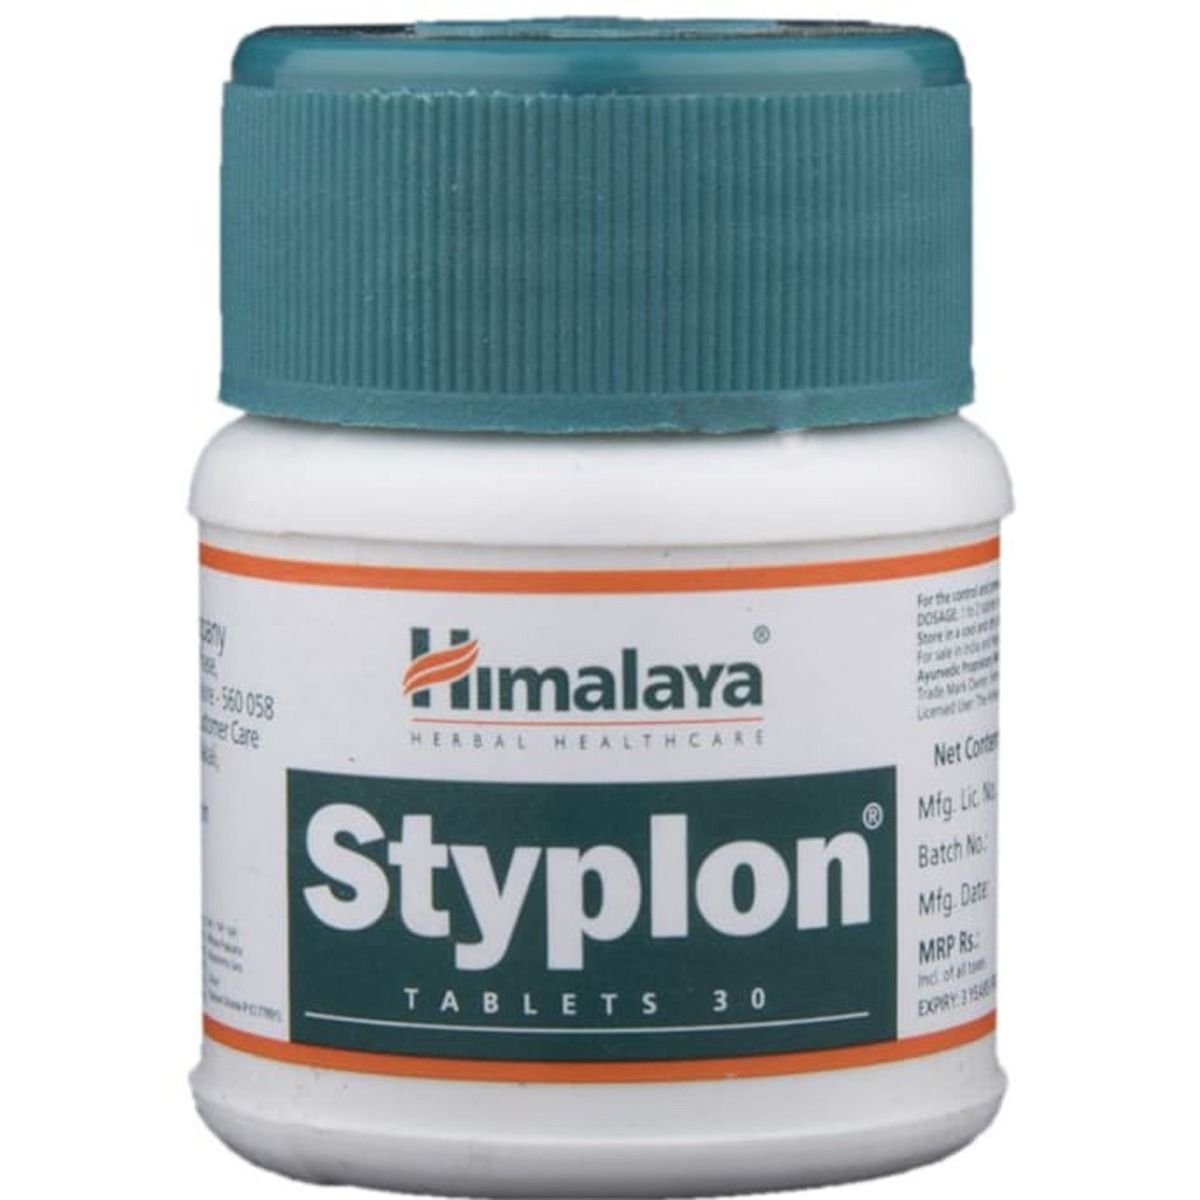 Himalaya Styplon, 30 Tablets, Pack of 1 